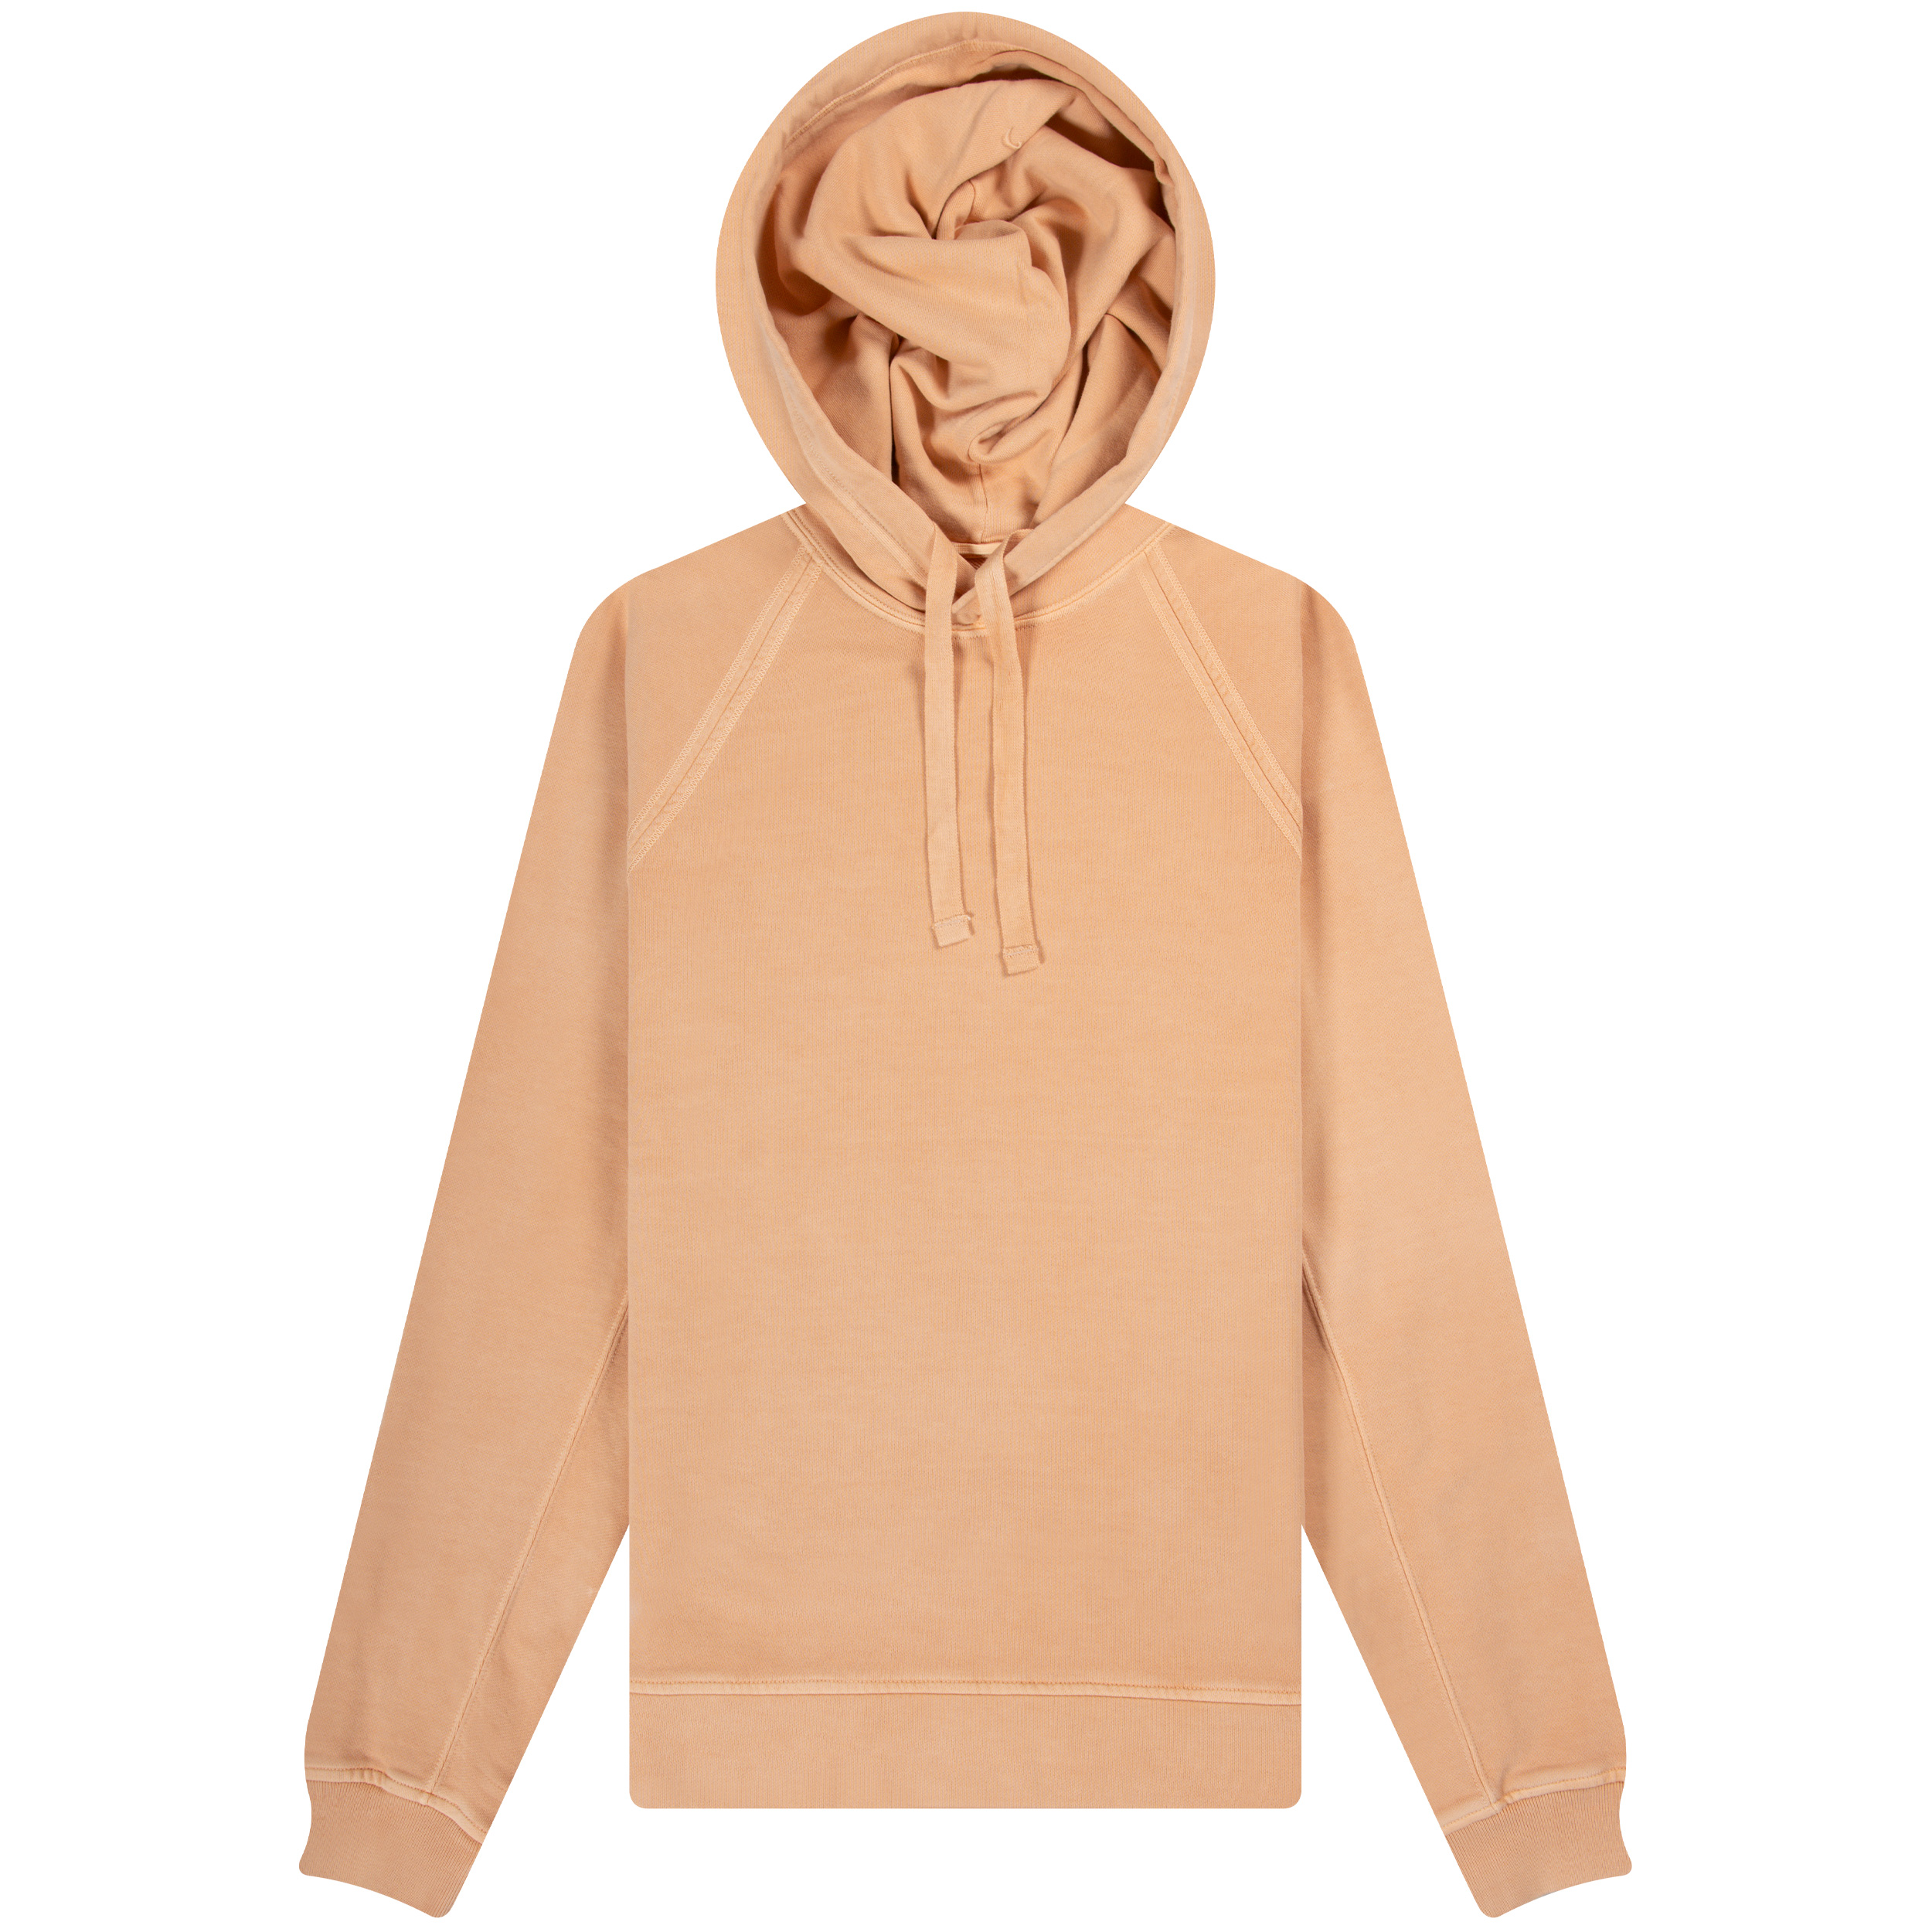 TEN-C ’Labelled’ Hooded Sweatshirt Peach